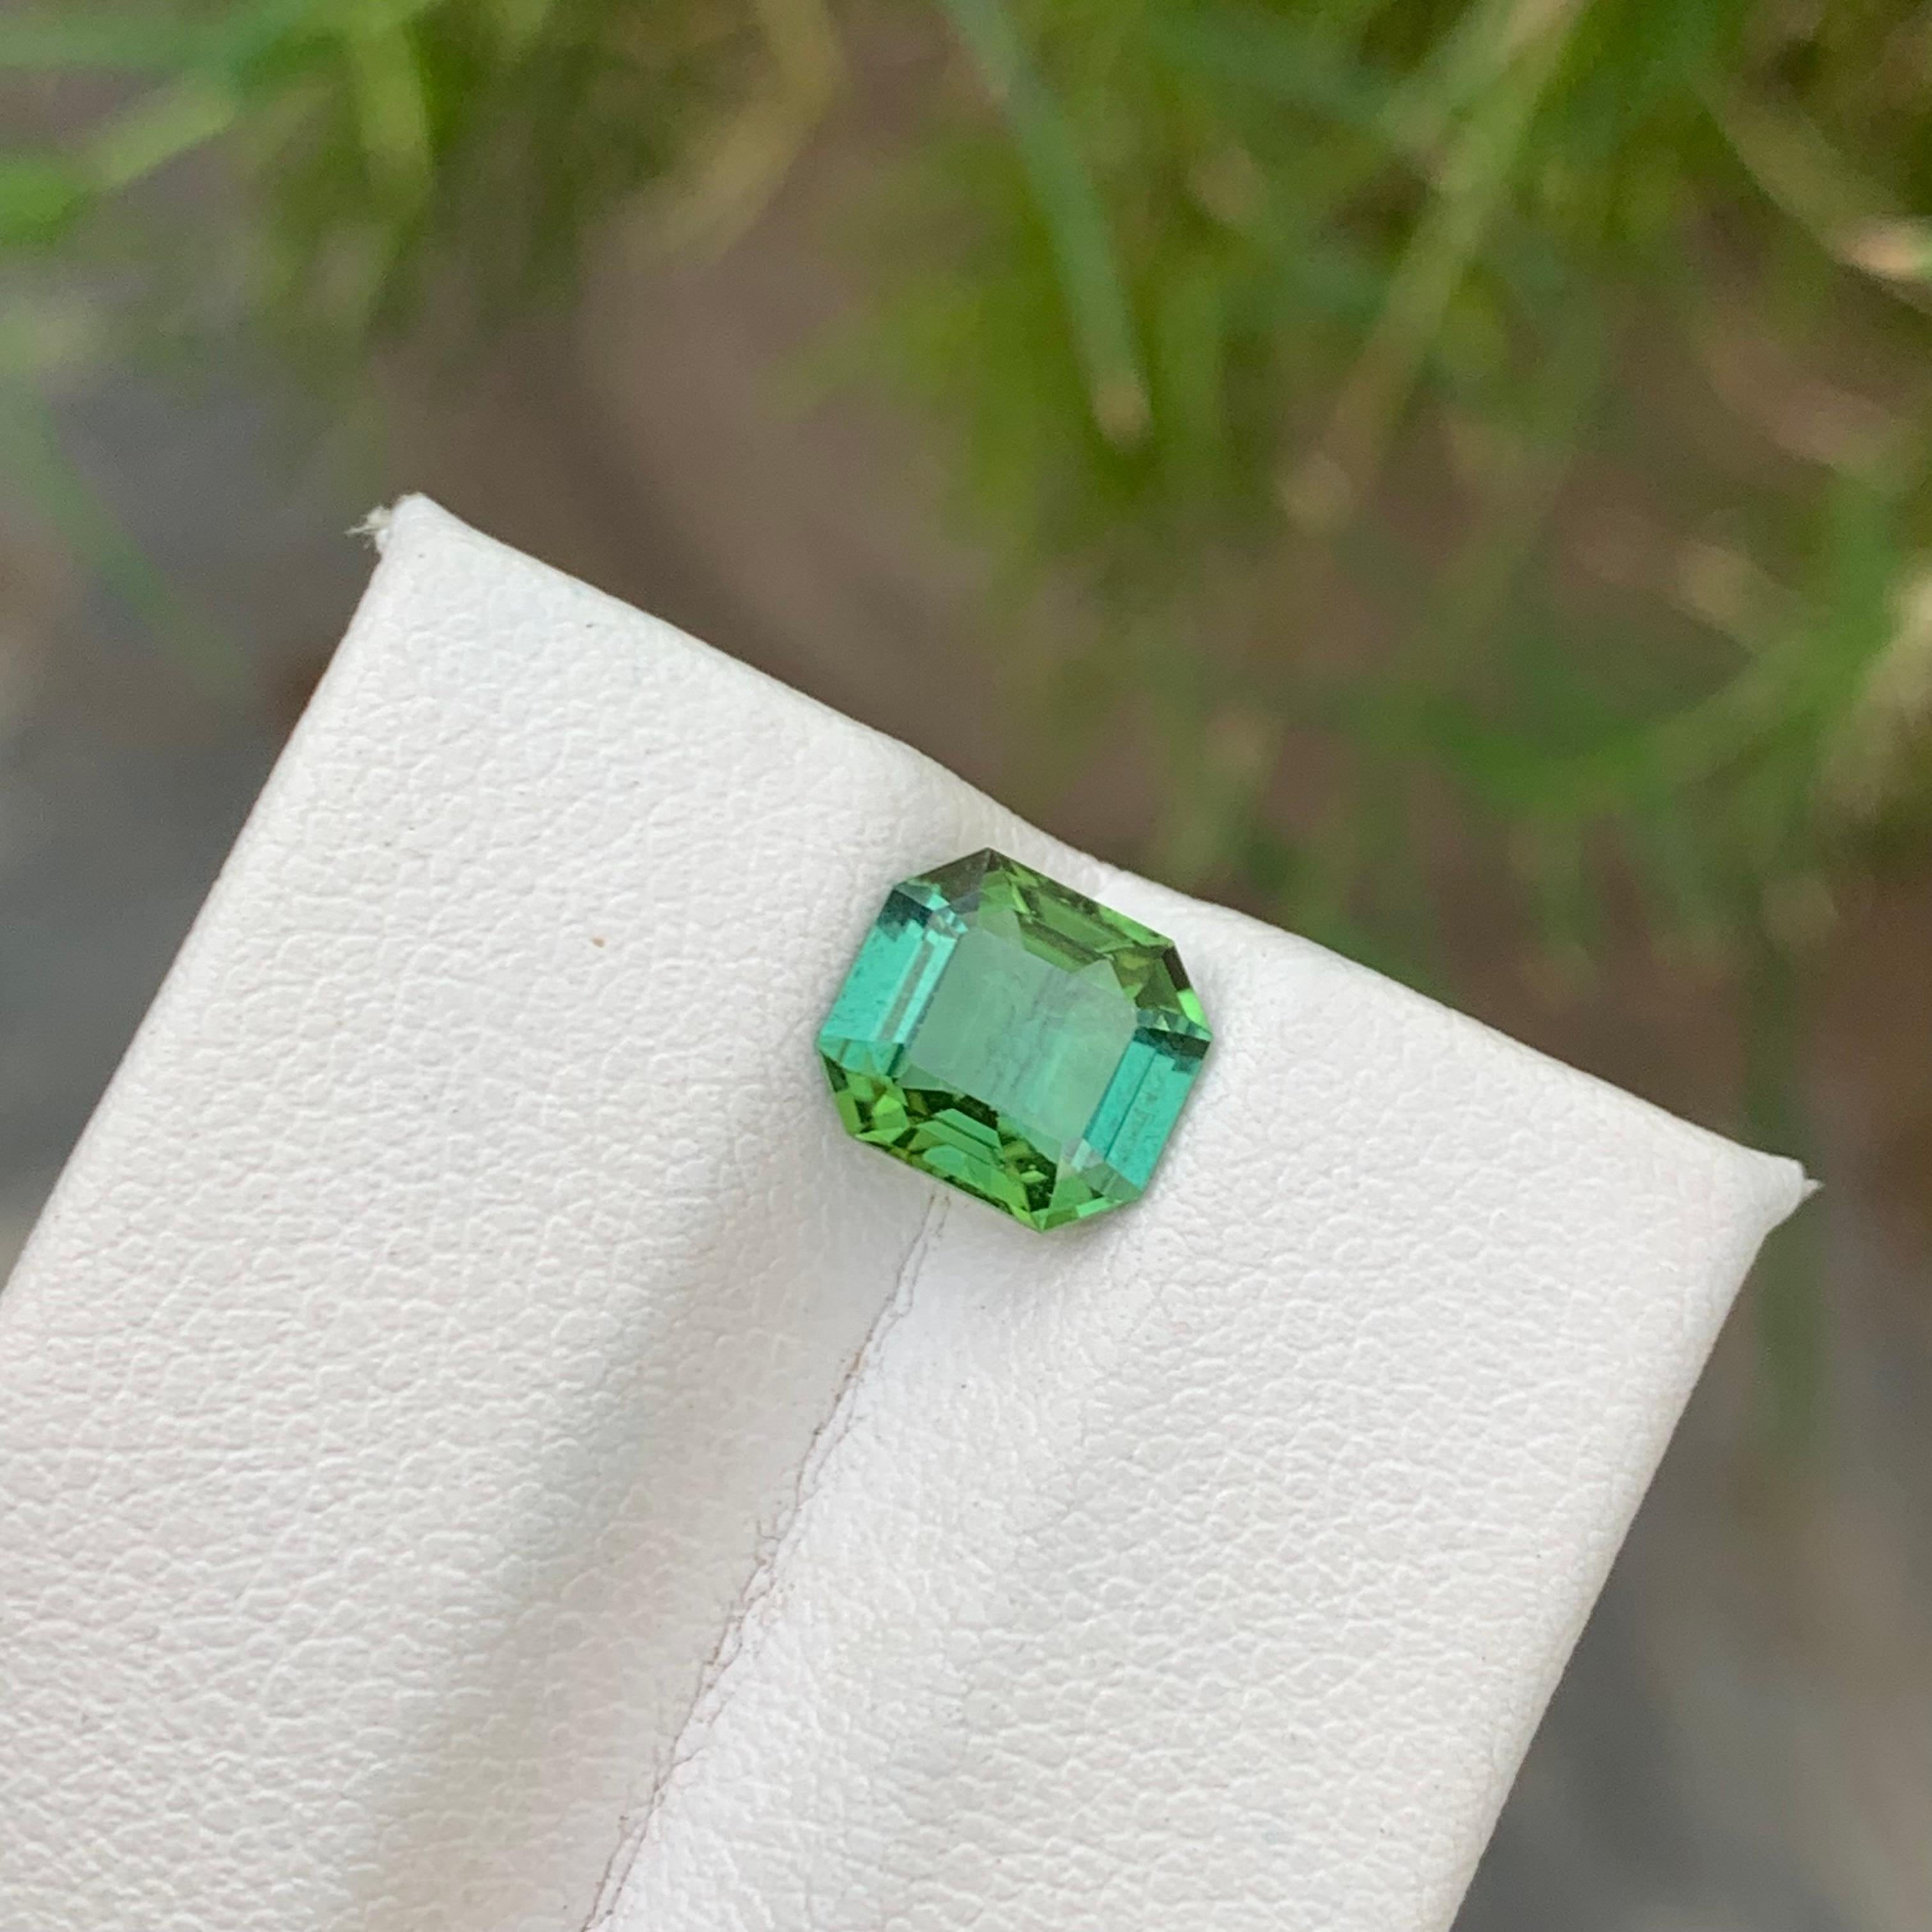 Gorgeous 1.65 Carat Mint Green Tourmaline Emerald Cut Ring Gem from Afghanistan 2